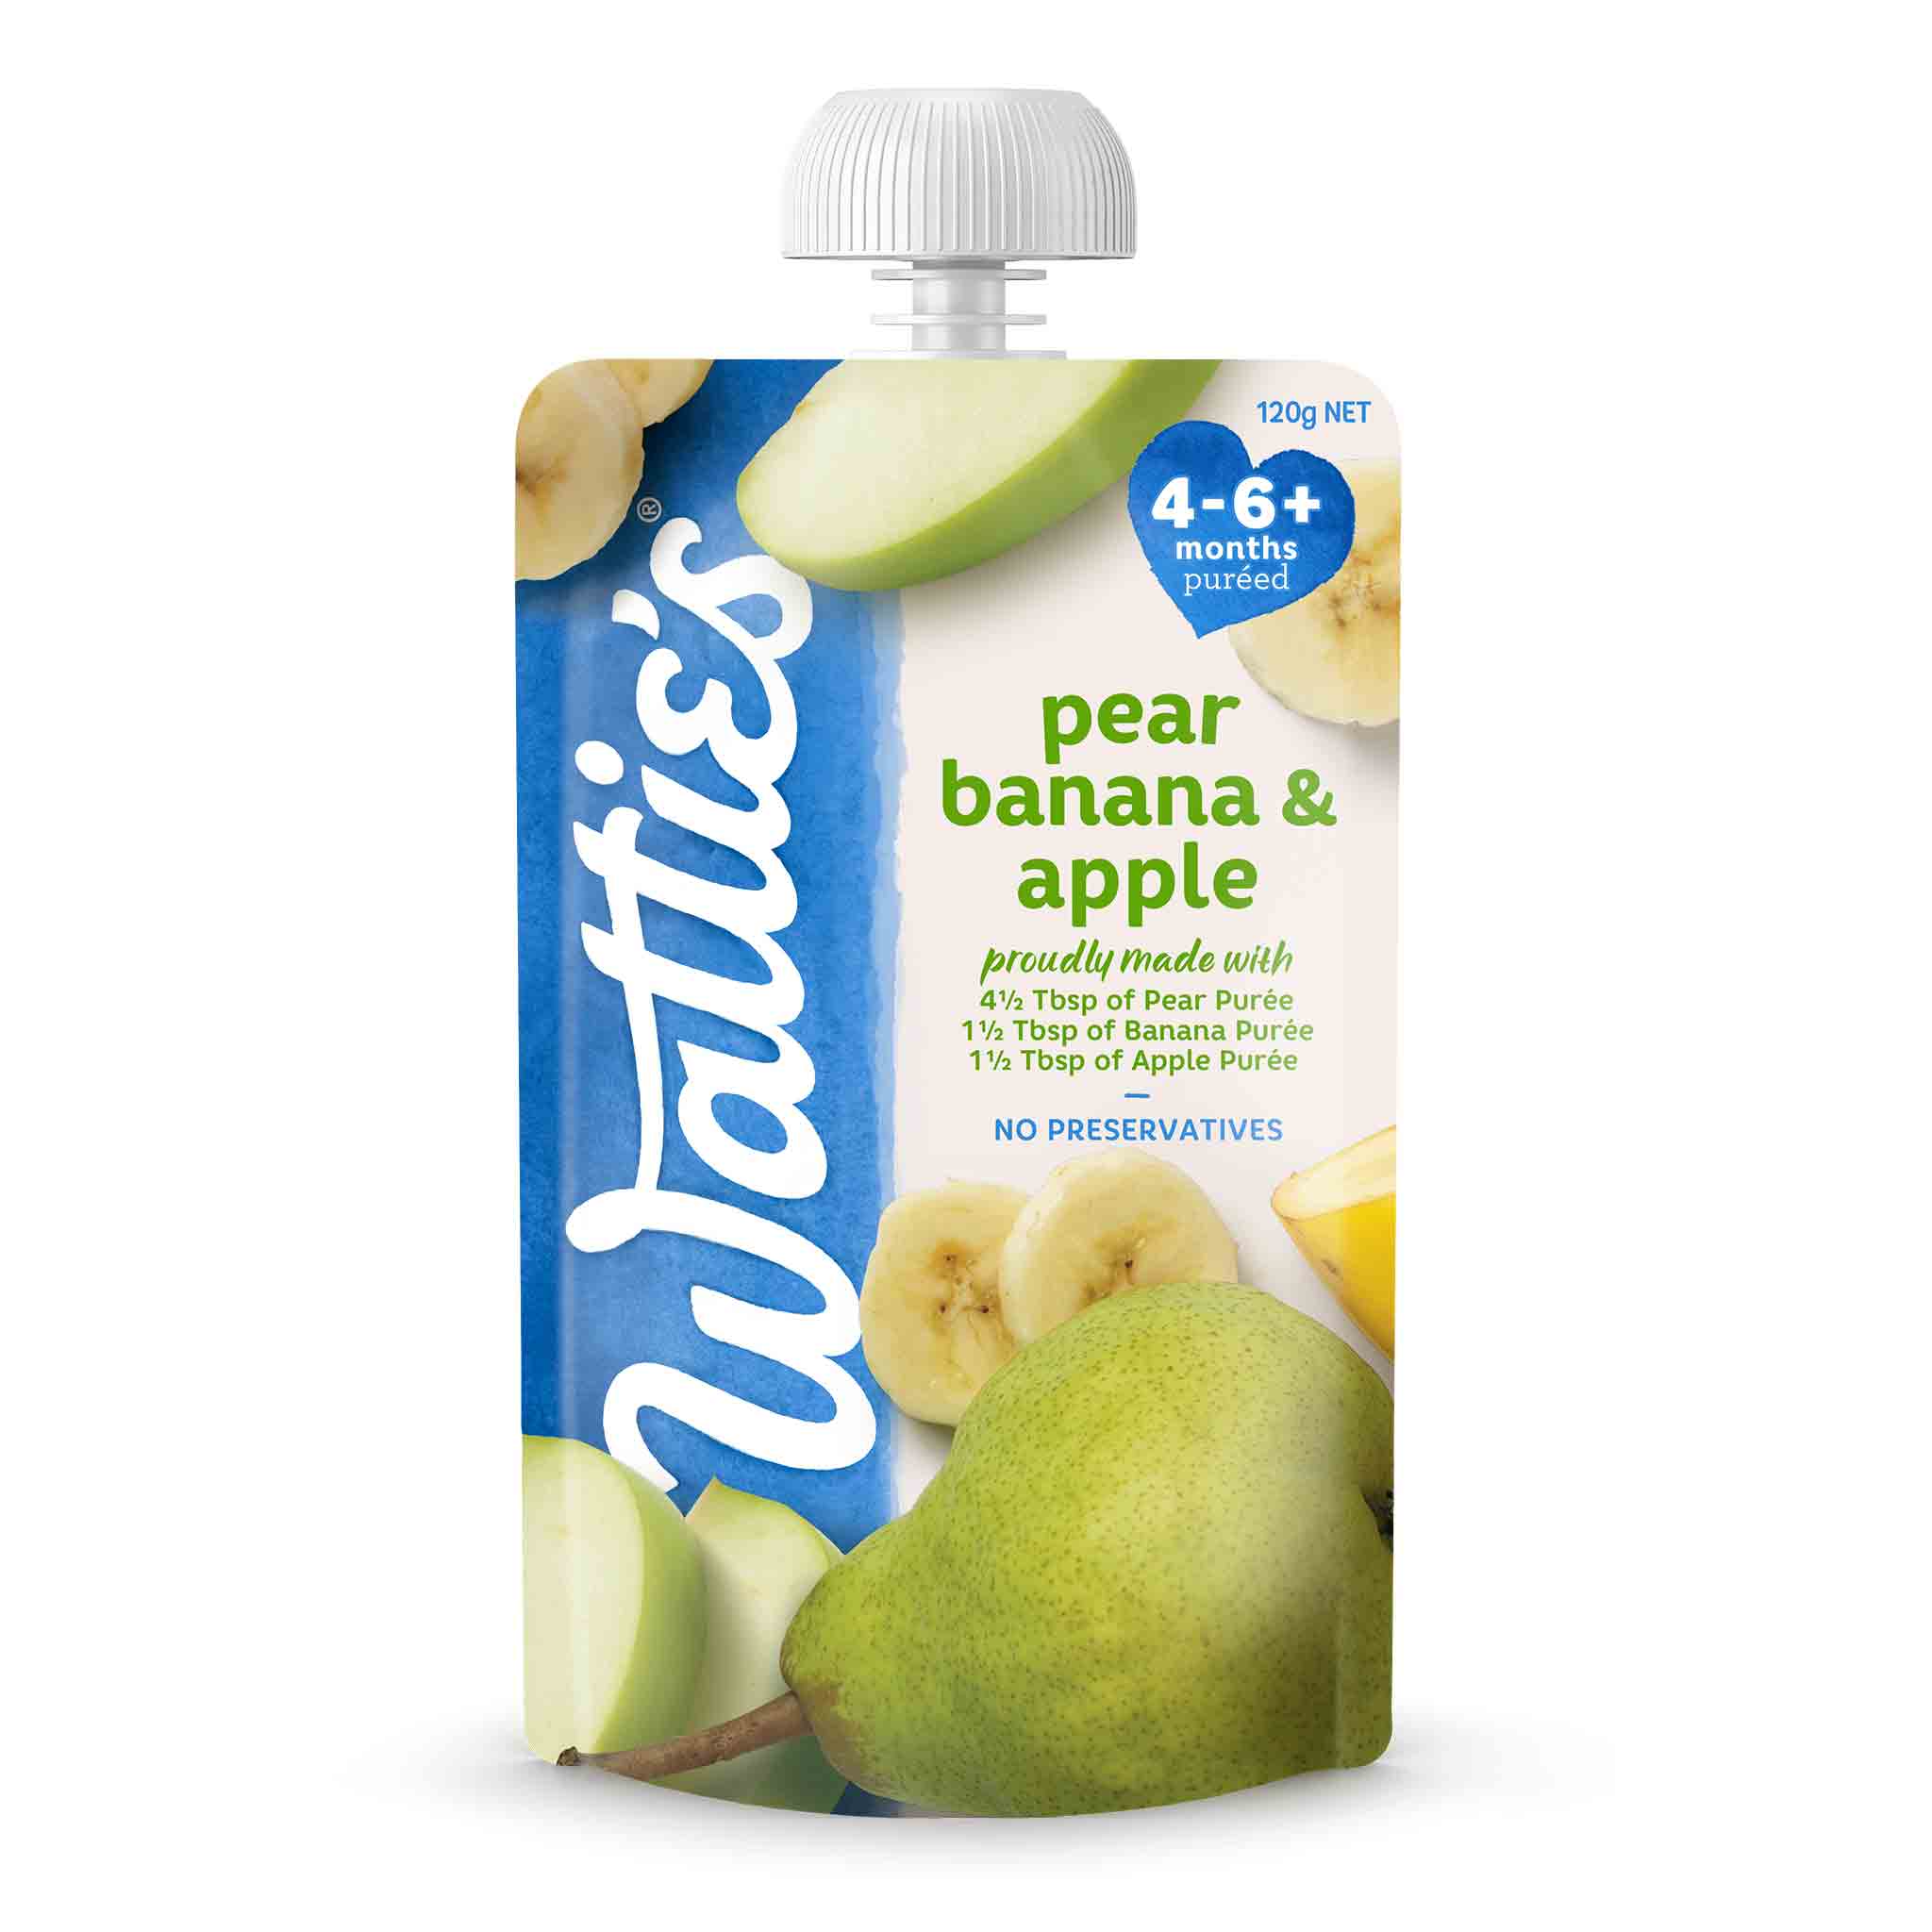 Photograph of Wattie's® Pear, Banana & Apple product